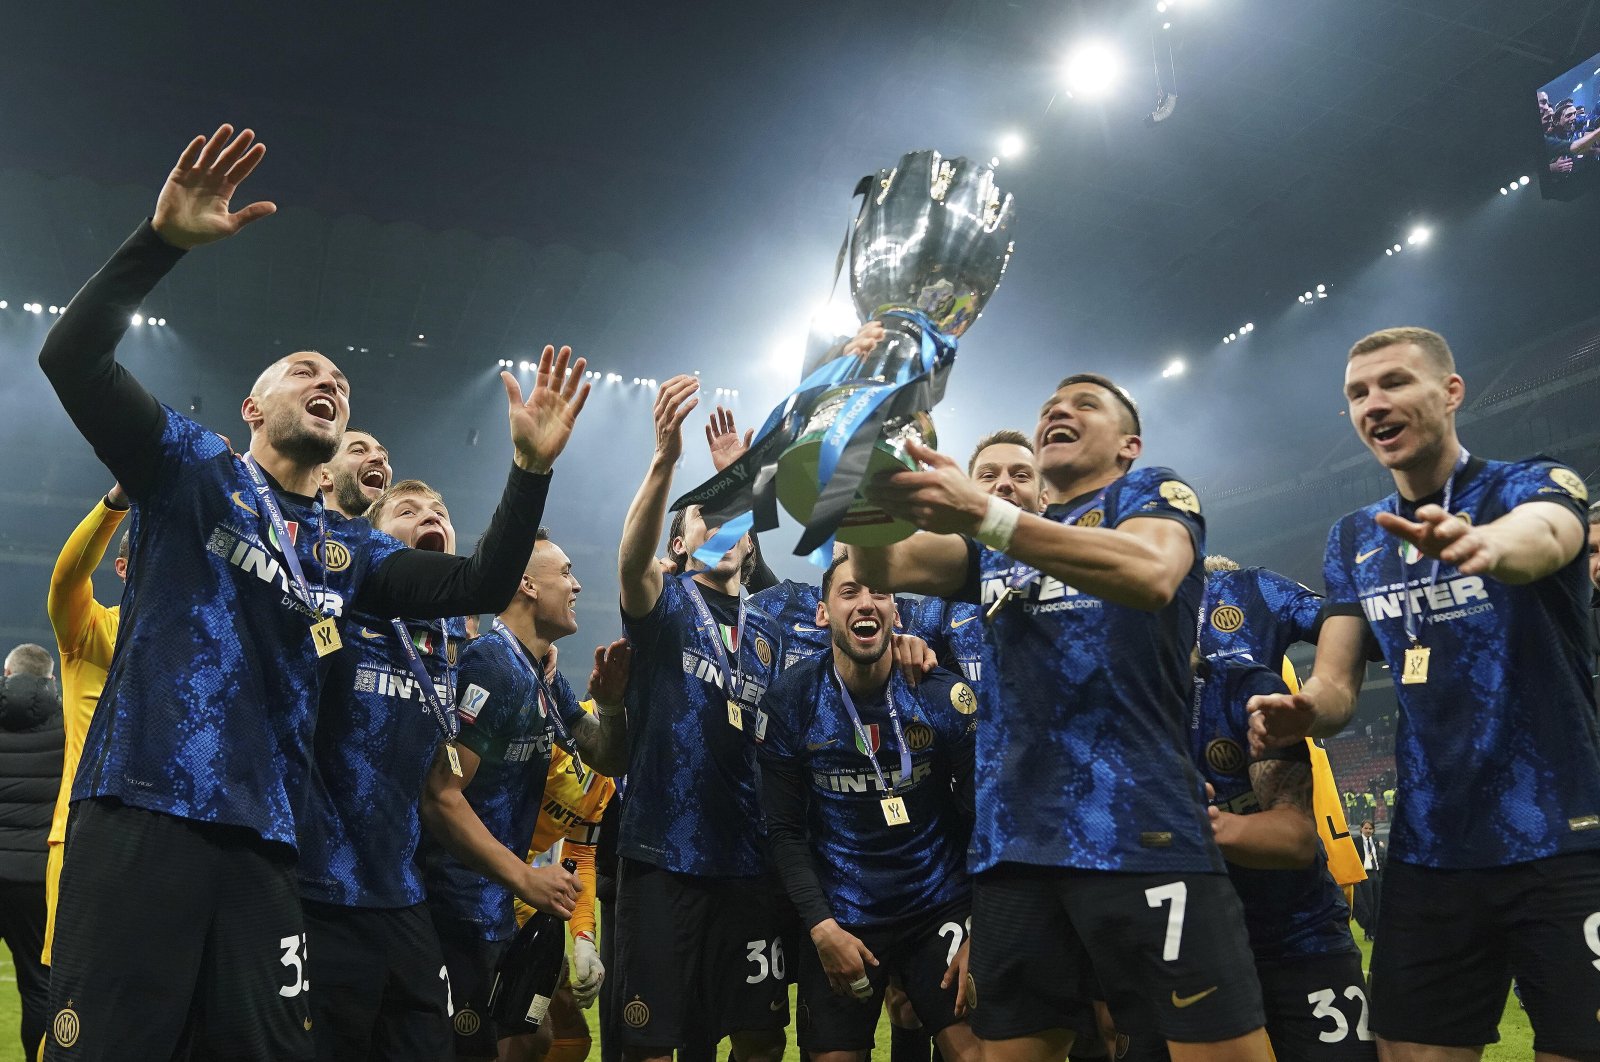 Inter Milan&#039; Alexis Sanchez lifts the Italian Super Cup trophy after a win over Juventus, Milan, Italy, Jan. 12, 2022. (AP Photo)